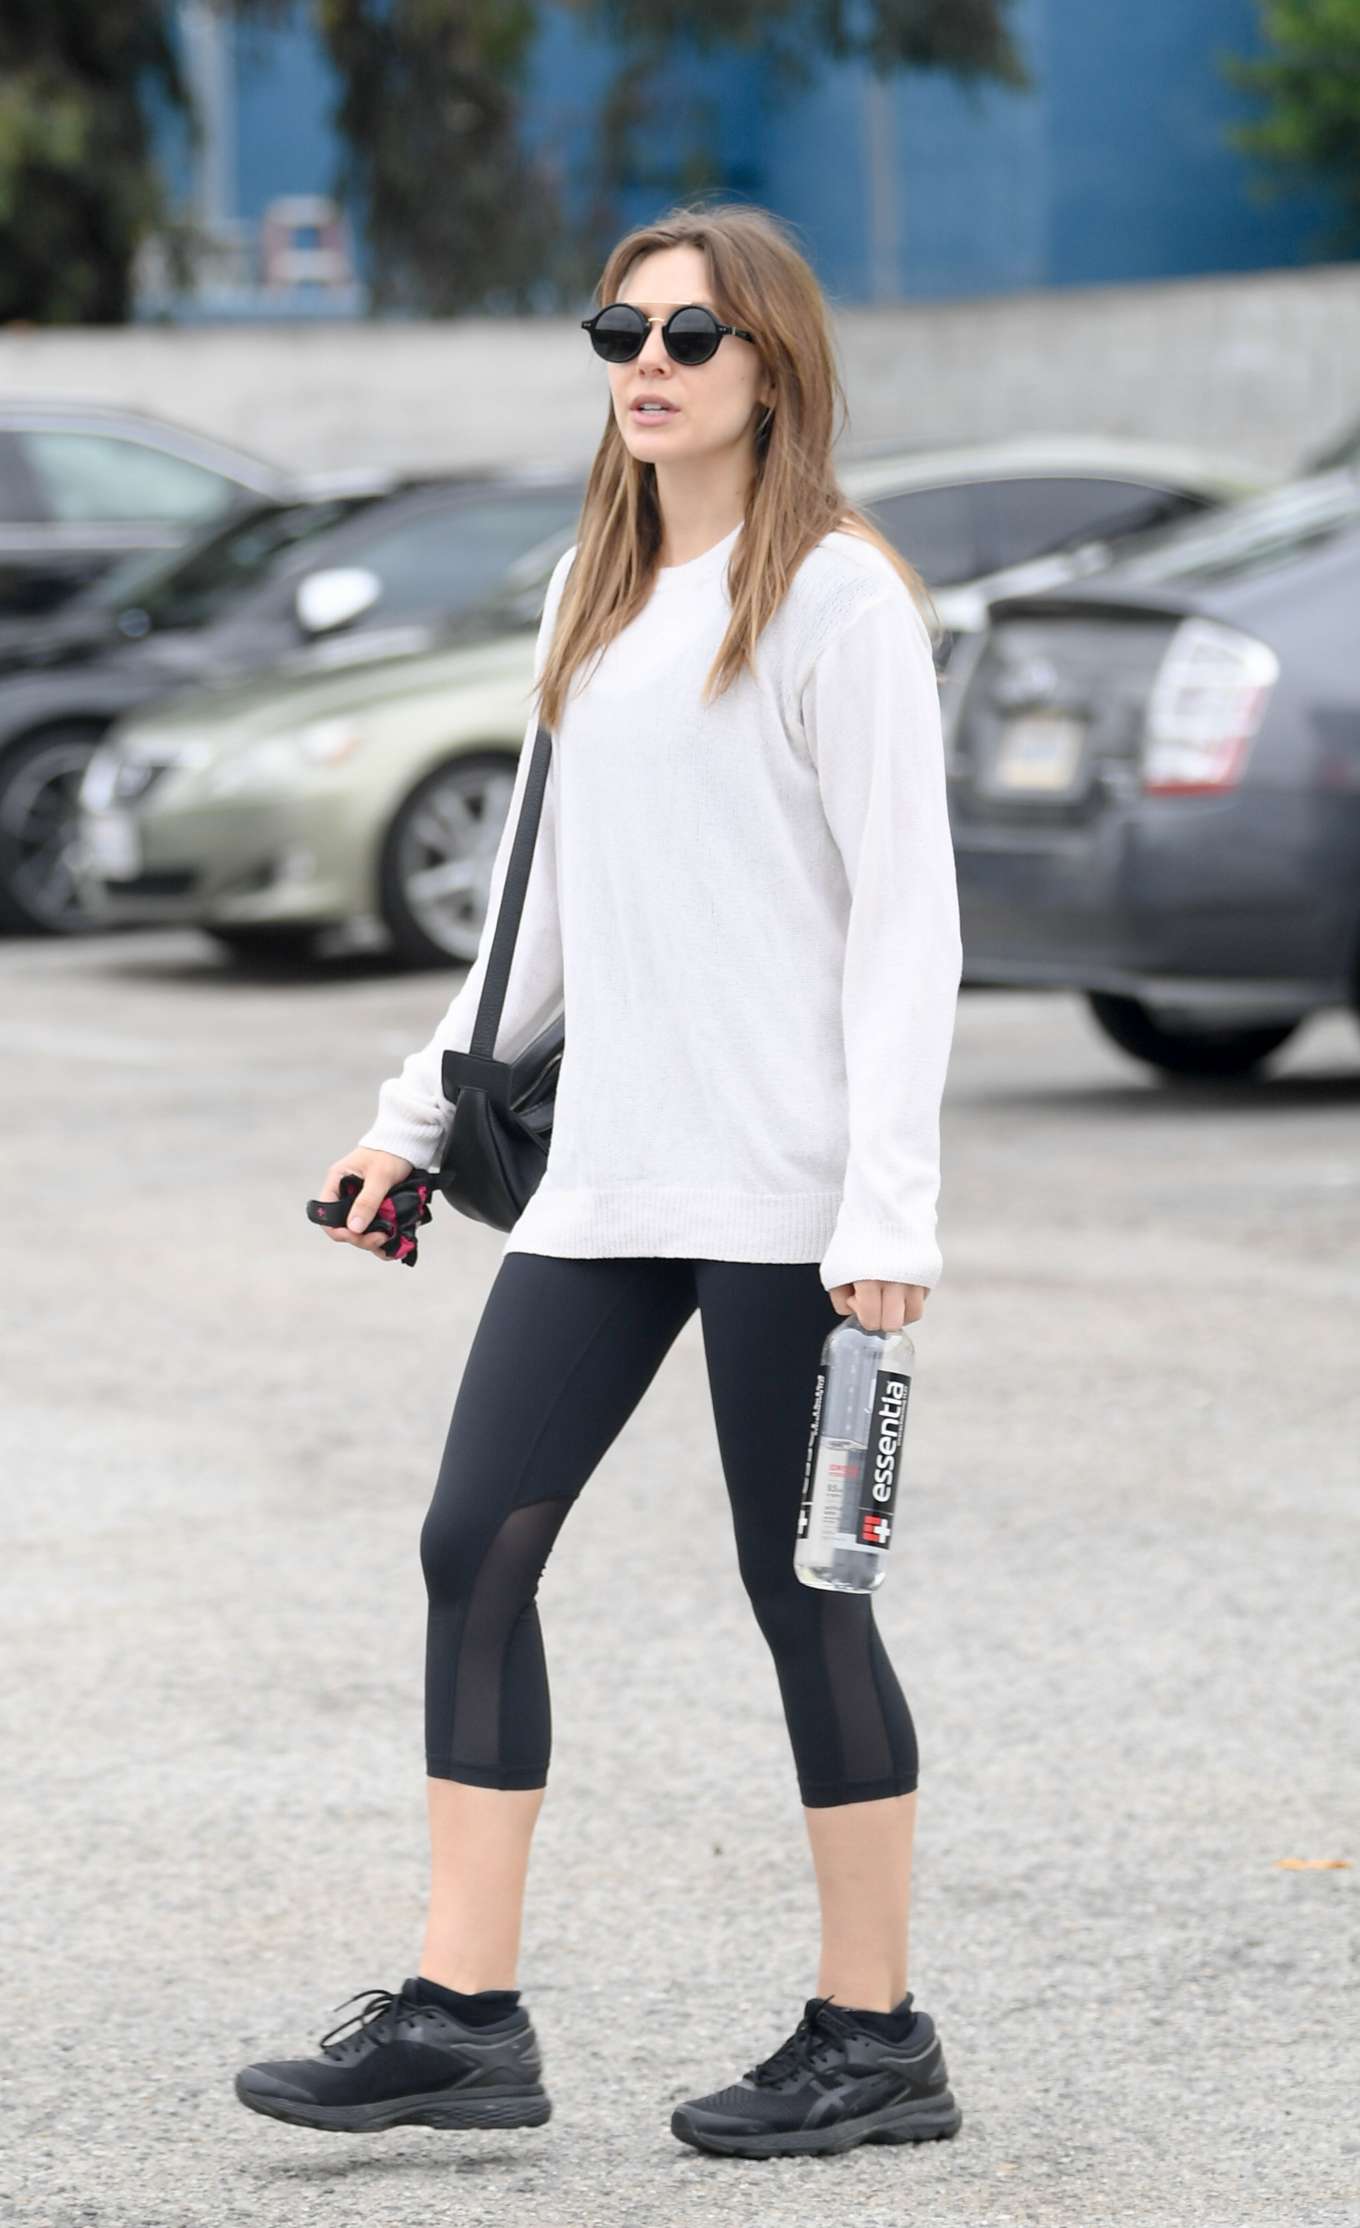 Elizabeth Olsen â€“ Leaving the gym in LA